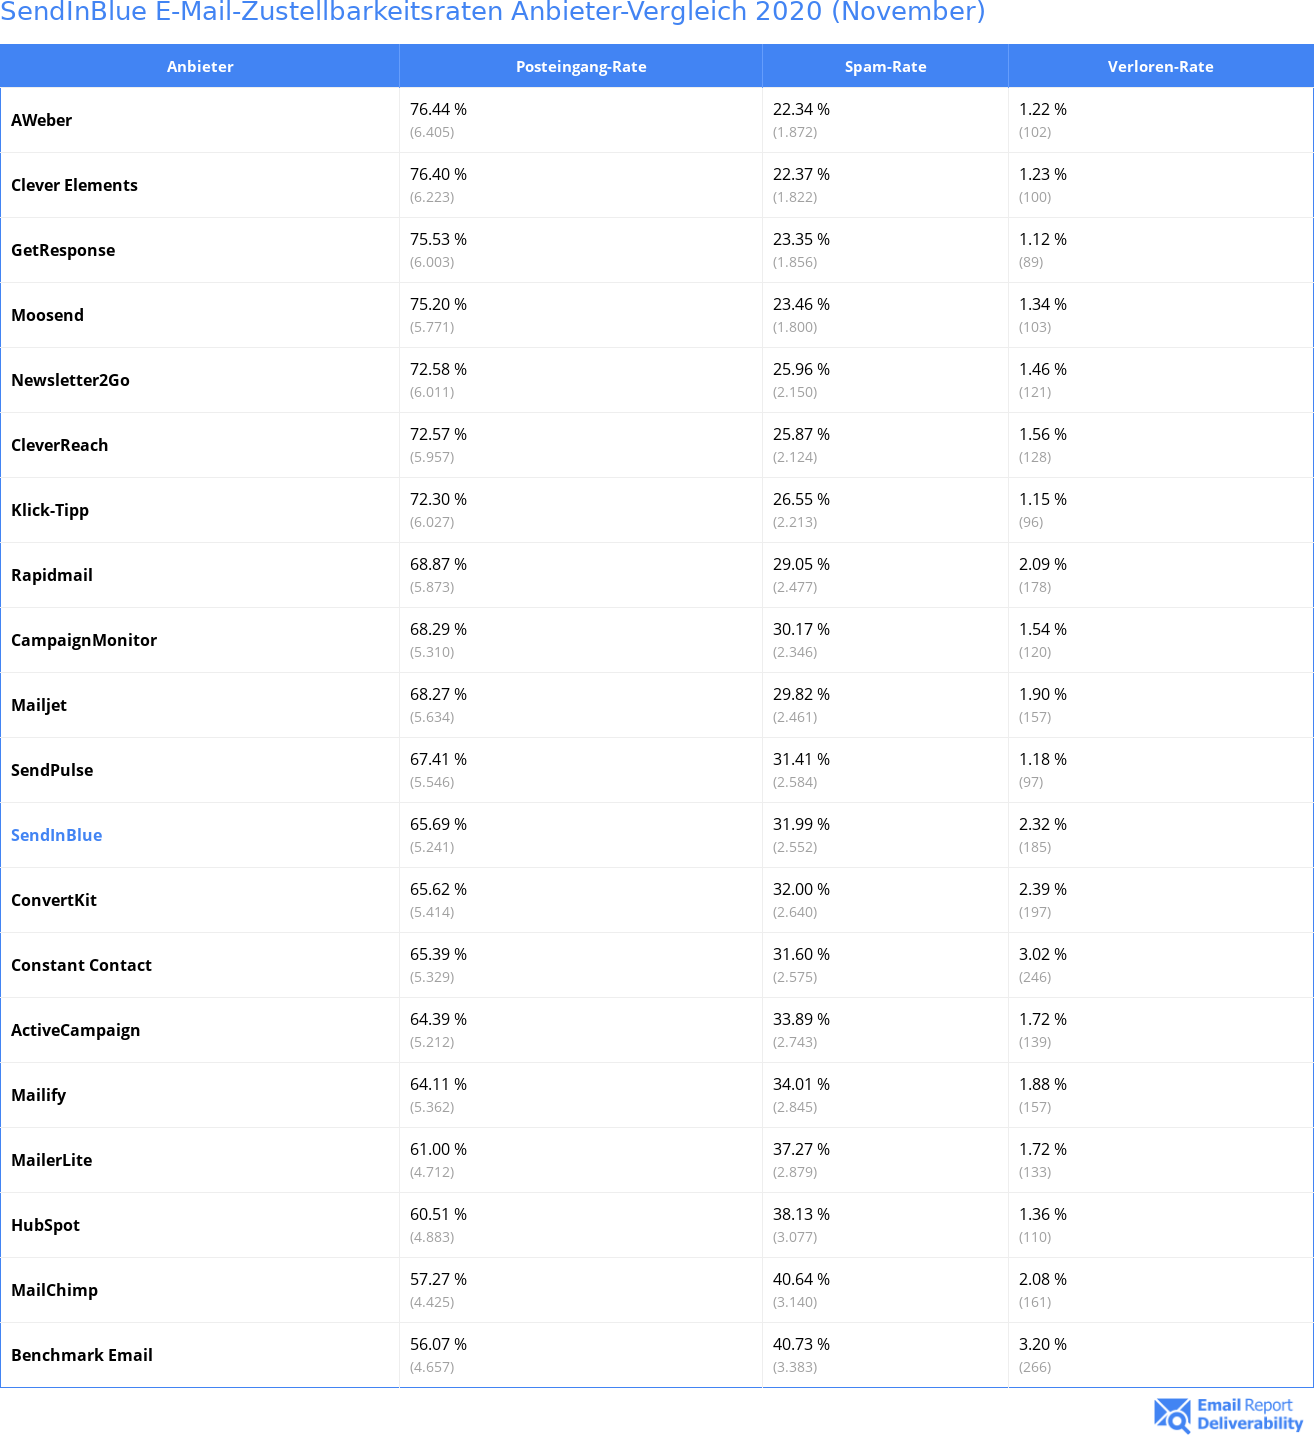 SendInBlue E-Mail-Zustellbarkeitsraten Anbieter-Vergleich 2020 (November)